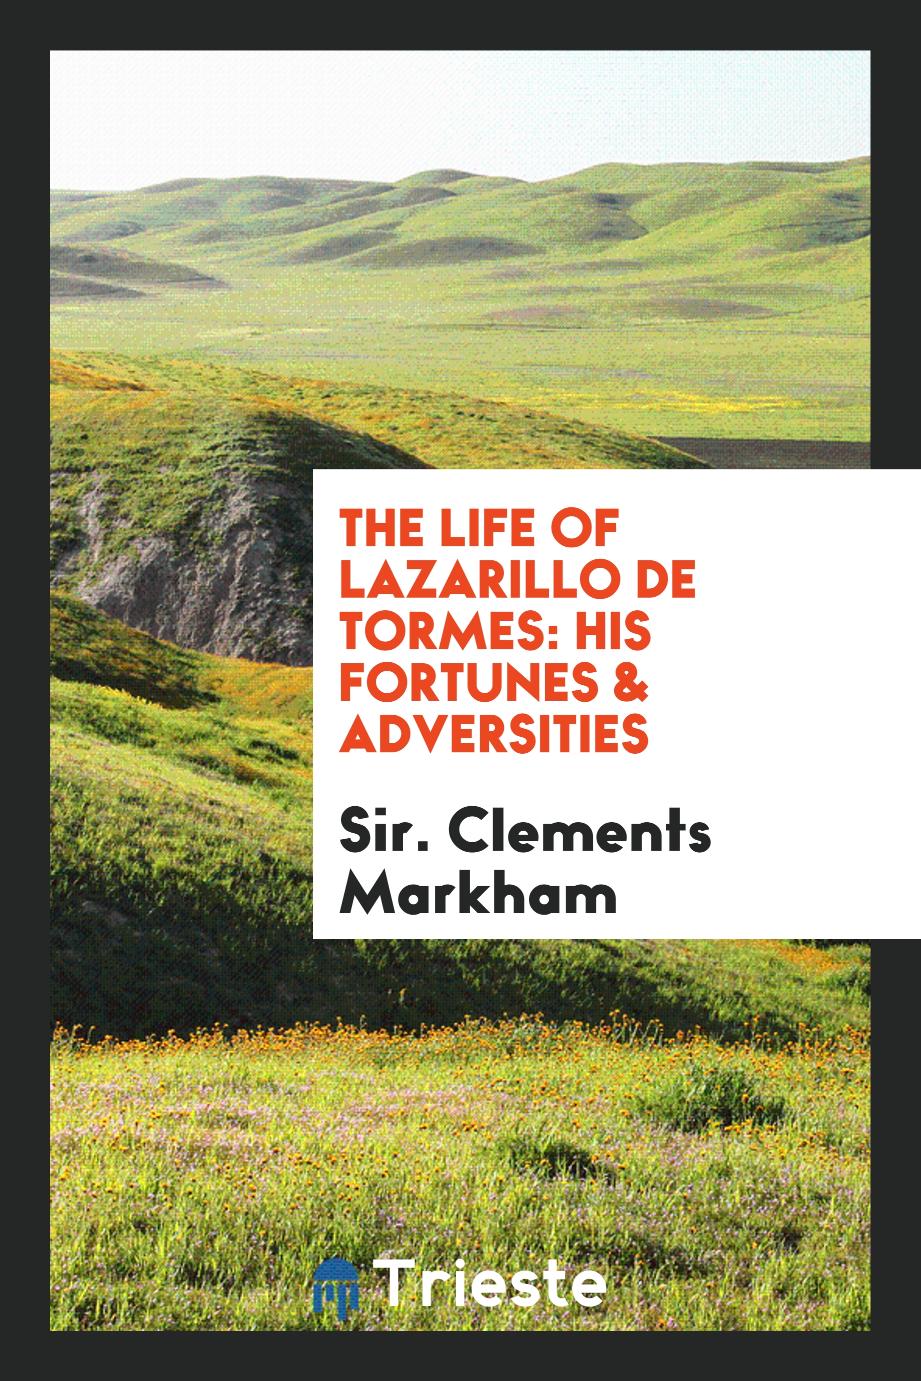 The Life of Lazarillo de Tormes: His Fortunes & Adversities